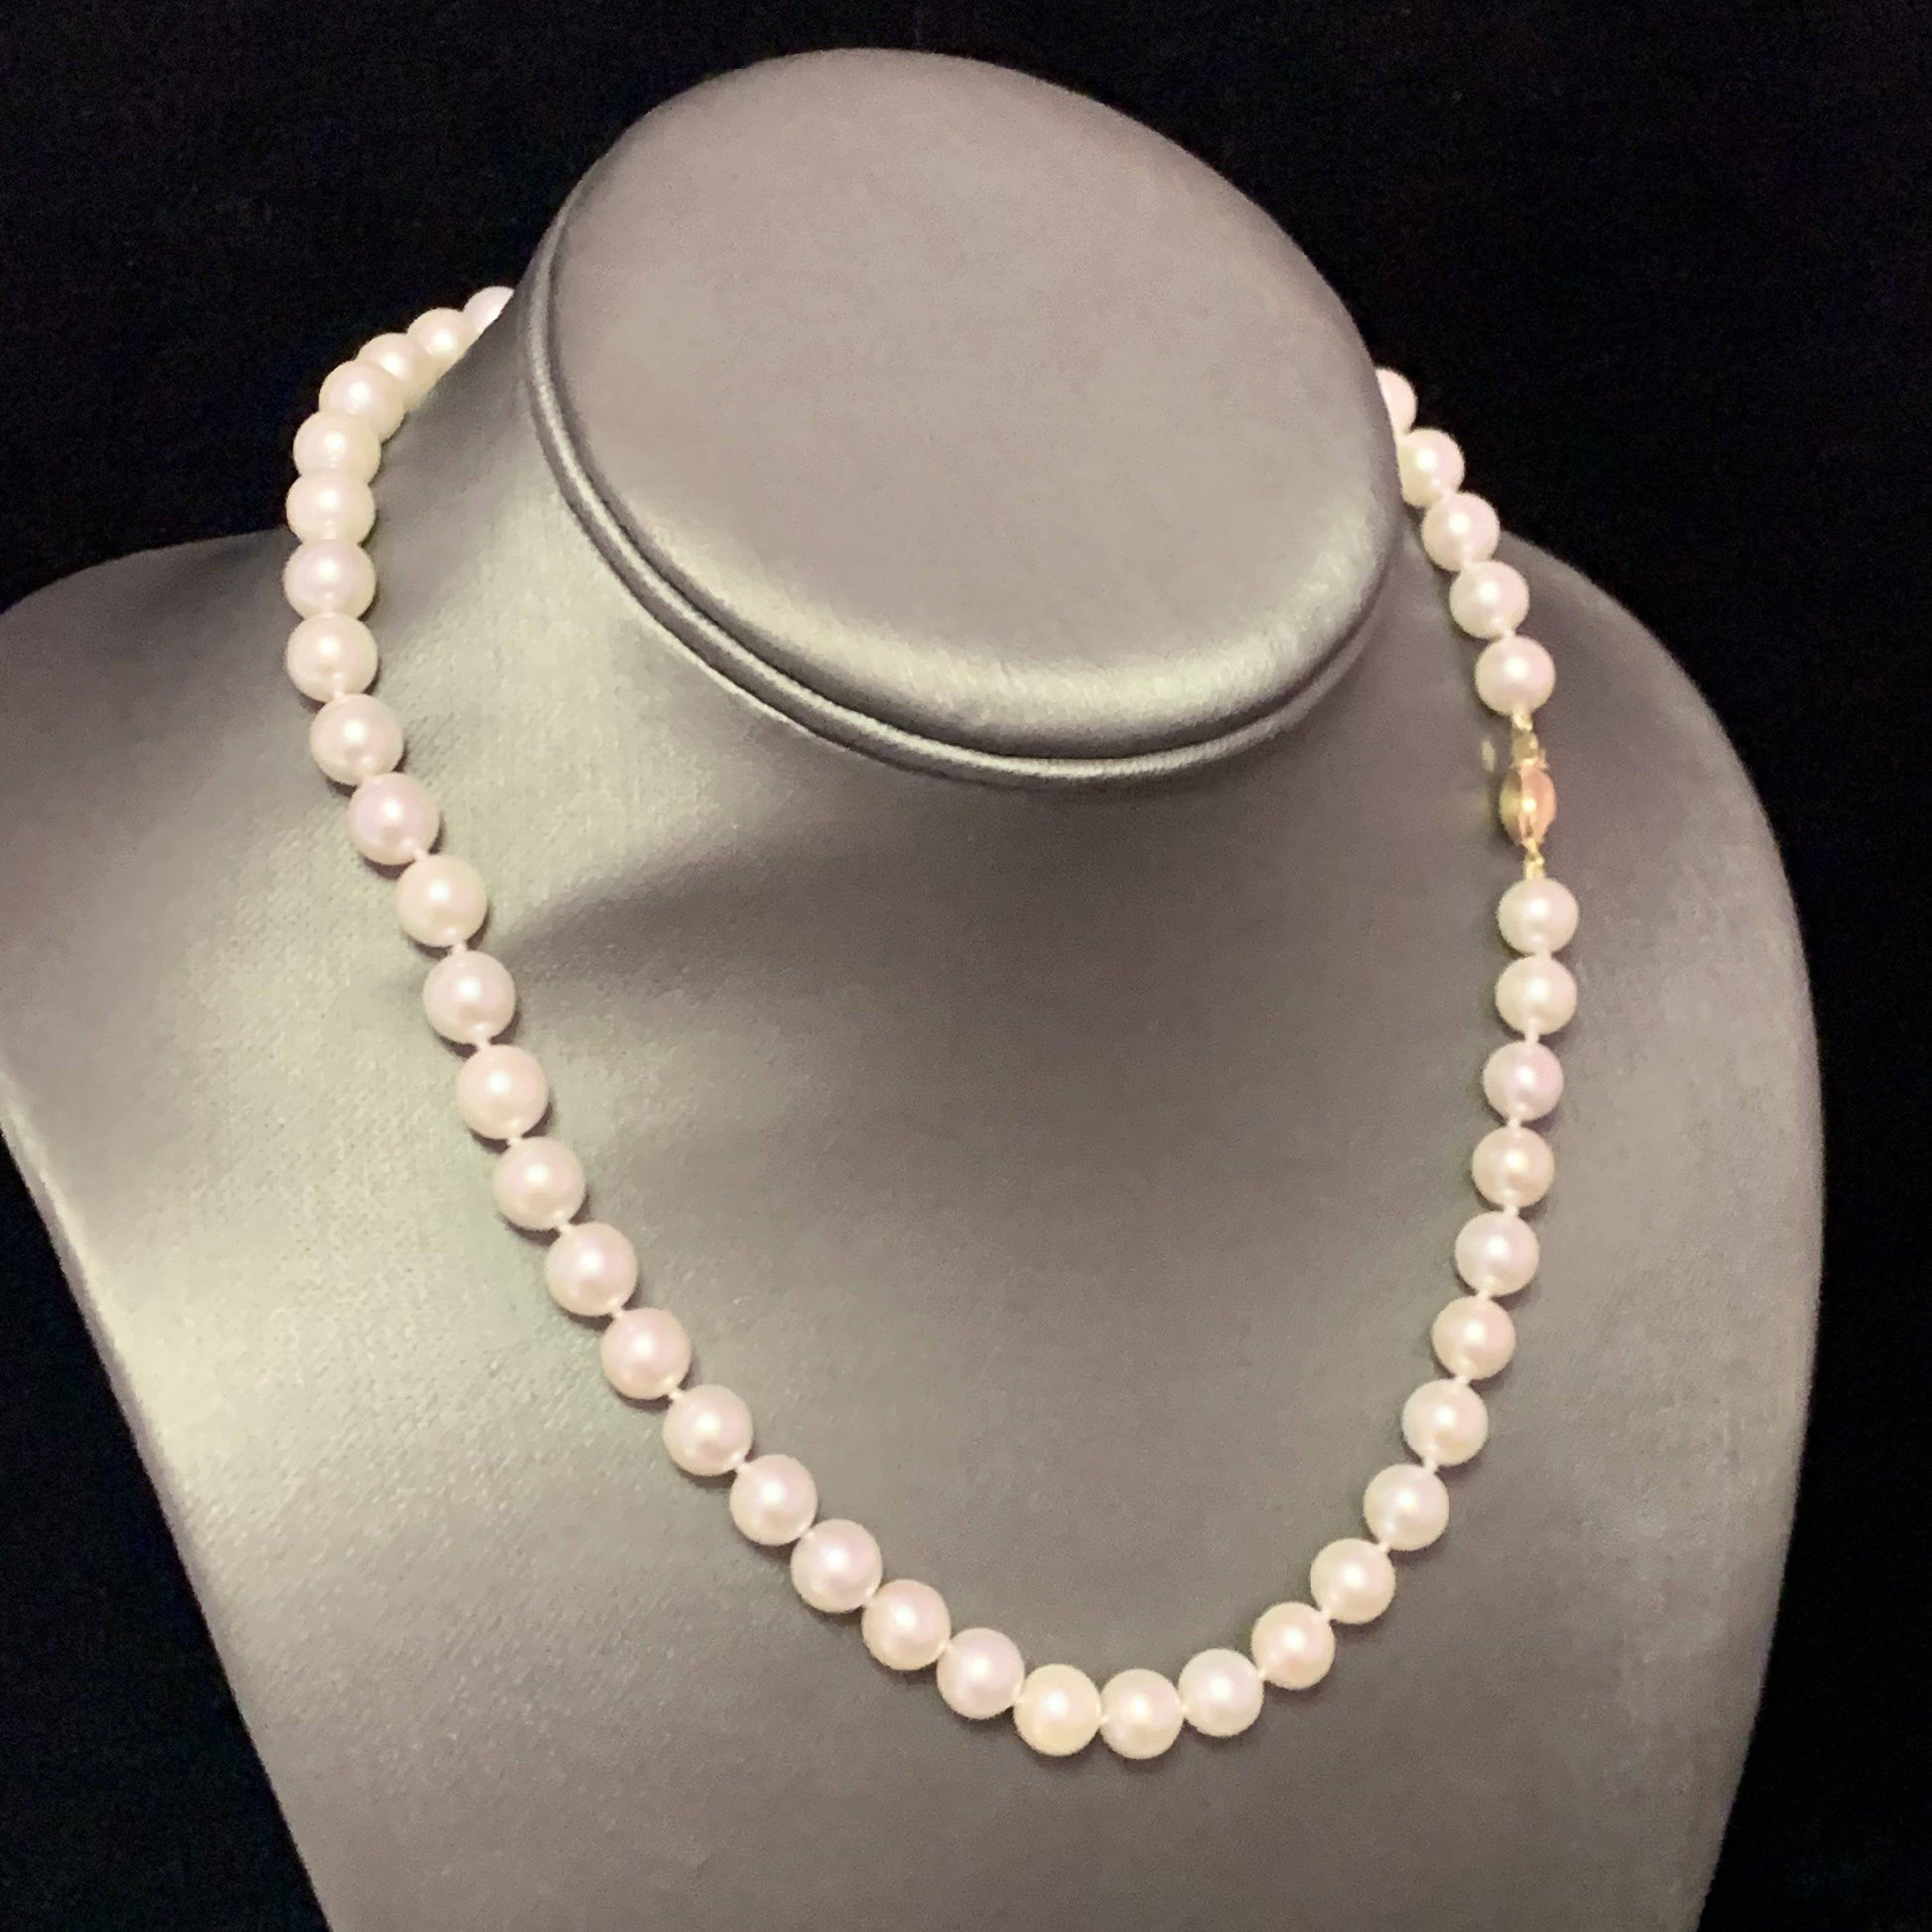 Akoya Pearl Necklace 14k YG 8 mm 16" Certified $3,950 111844 - Certified Estate Jewelry